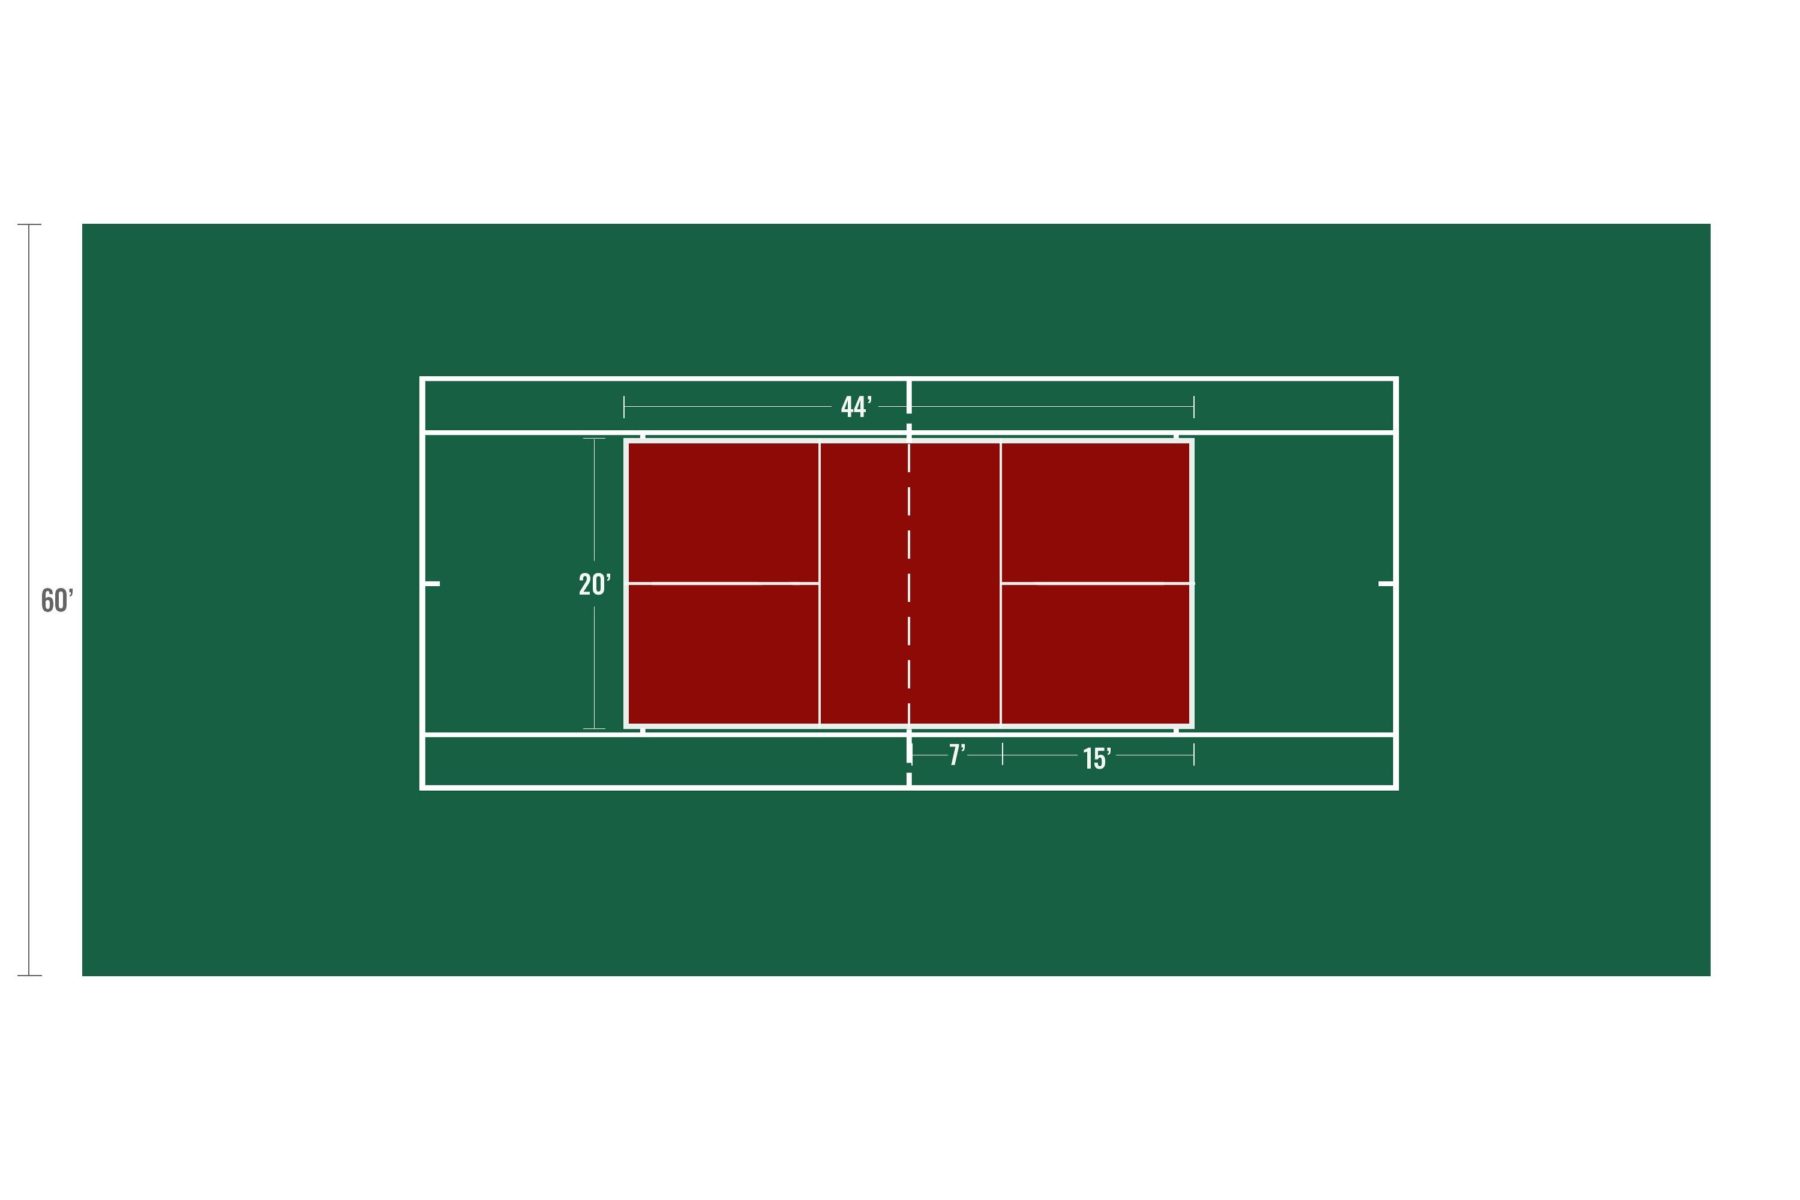 Tennis to Pickleball Court Conversion Guide Flooring Inc